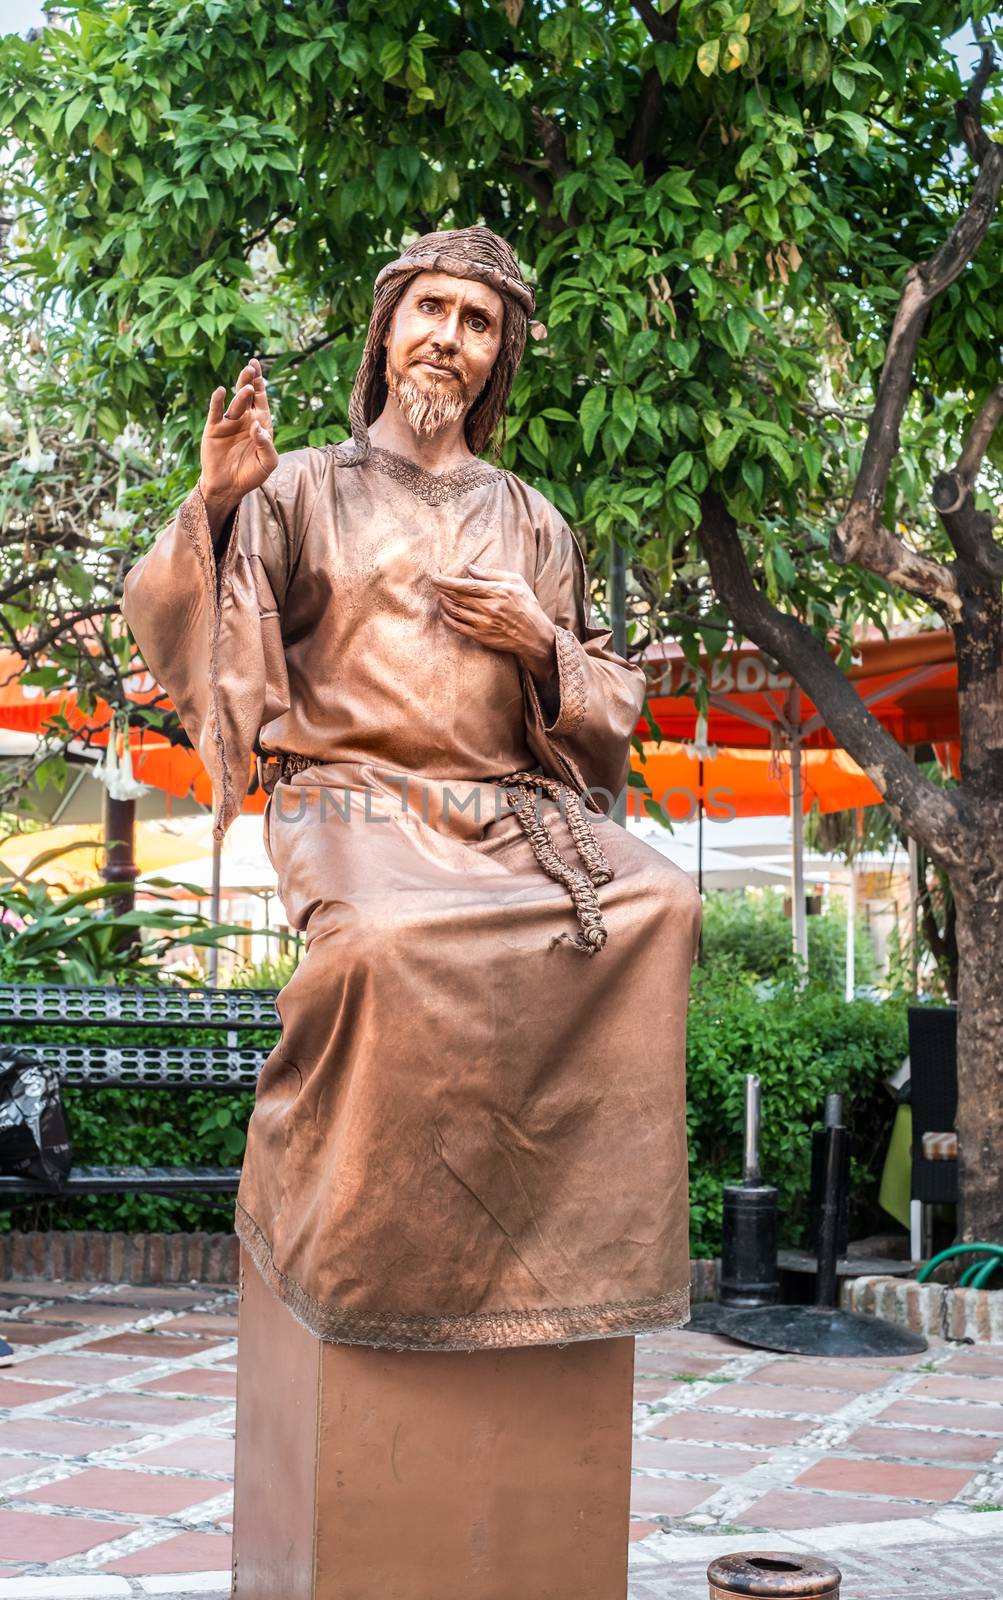 Marbella, Spain - June 27, 2018. Human statue of a Jesus performs on the Orange tree square, Plaza de los Naranjos, Marbella, Spain